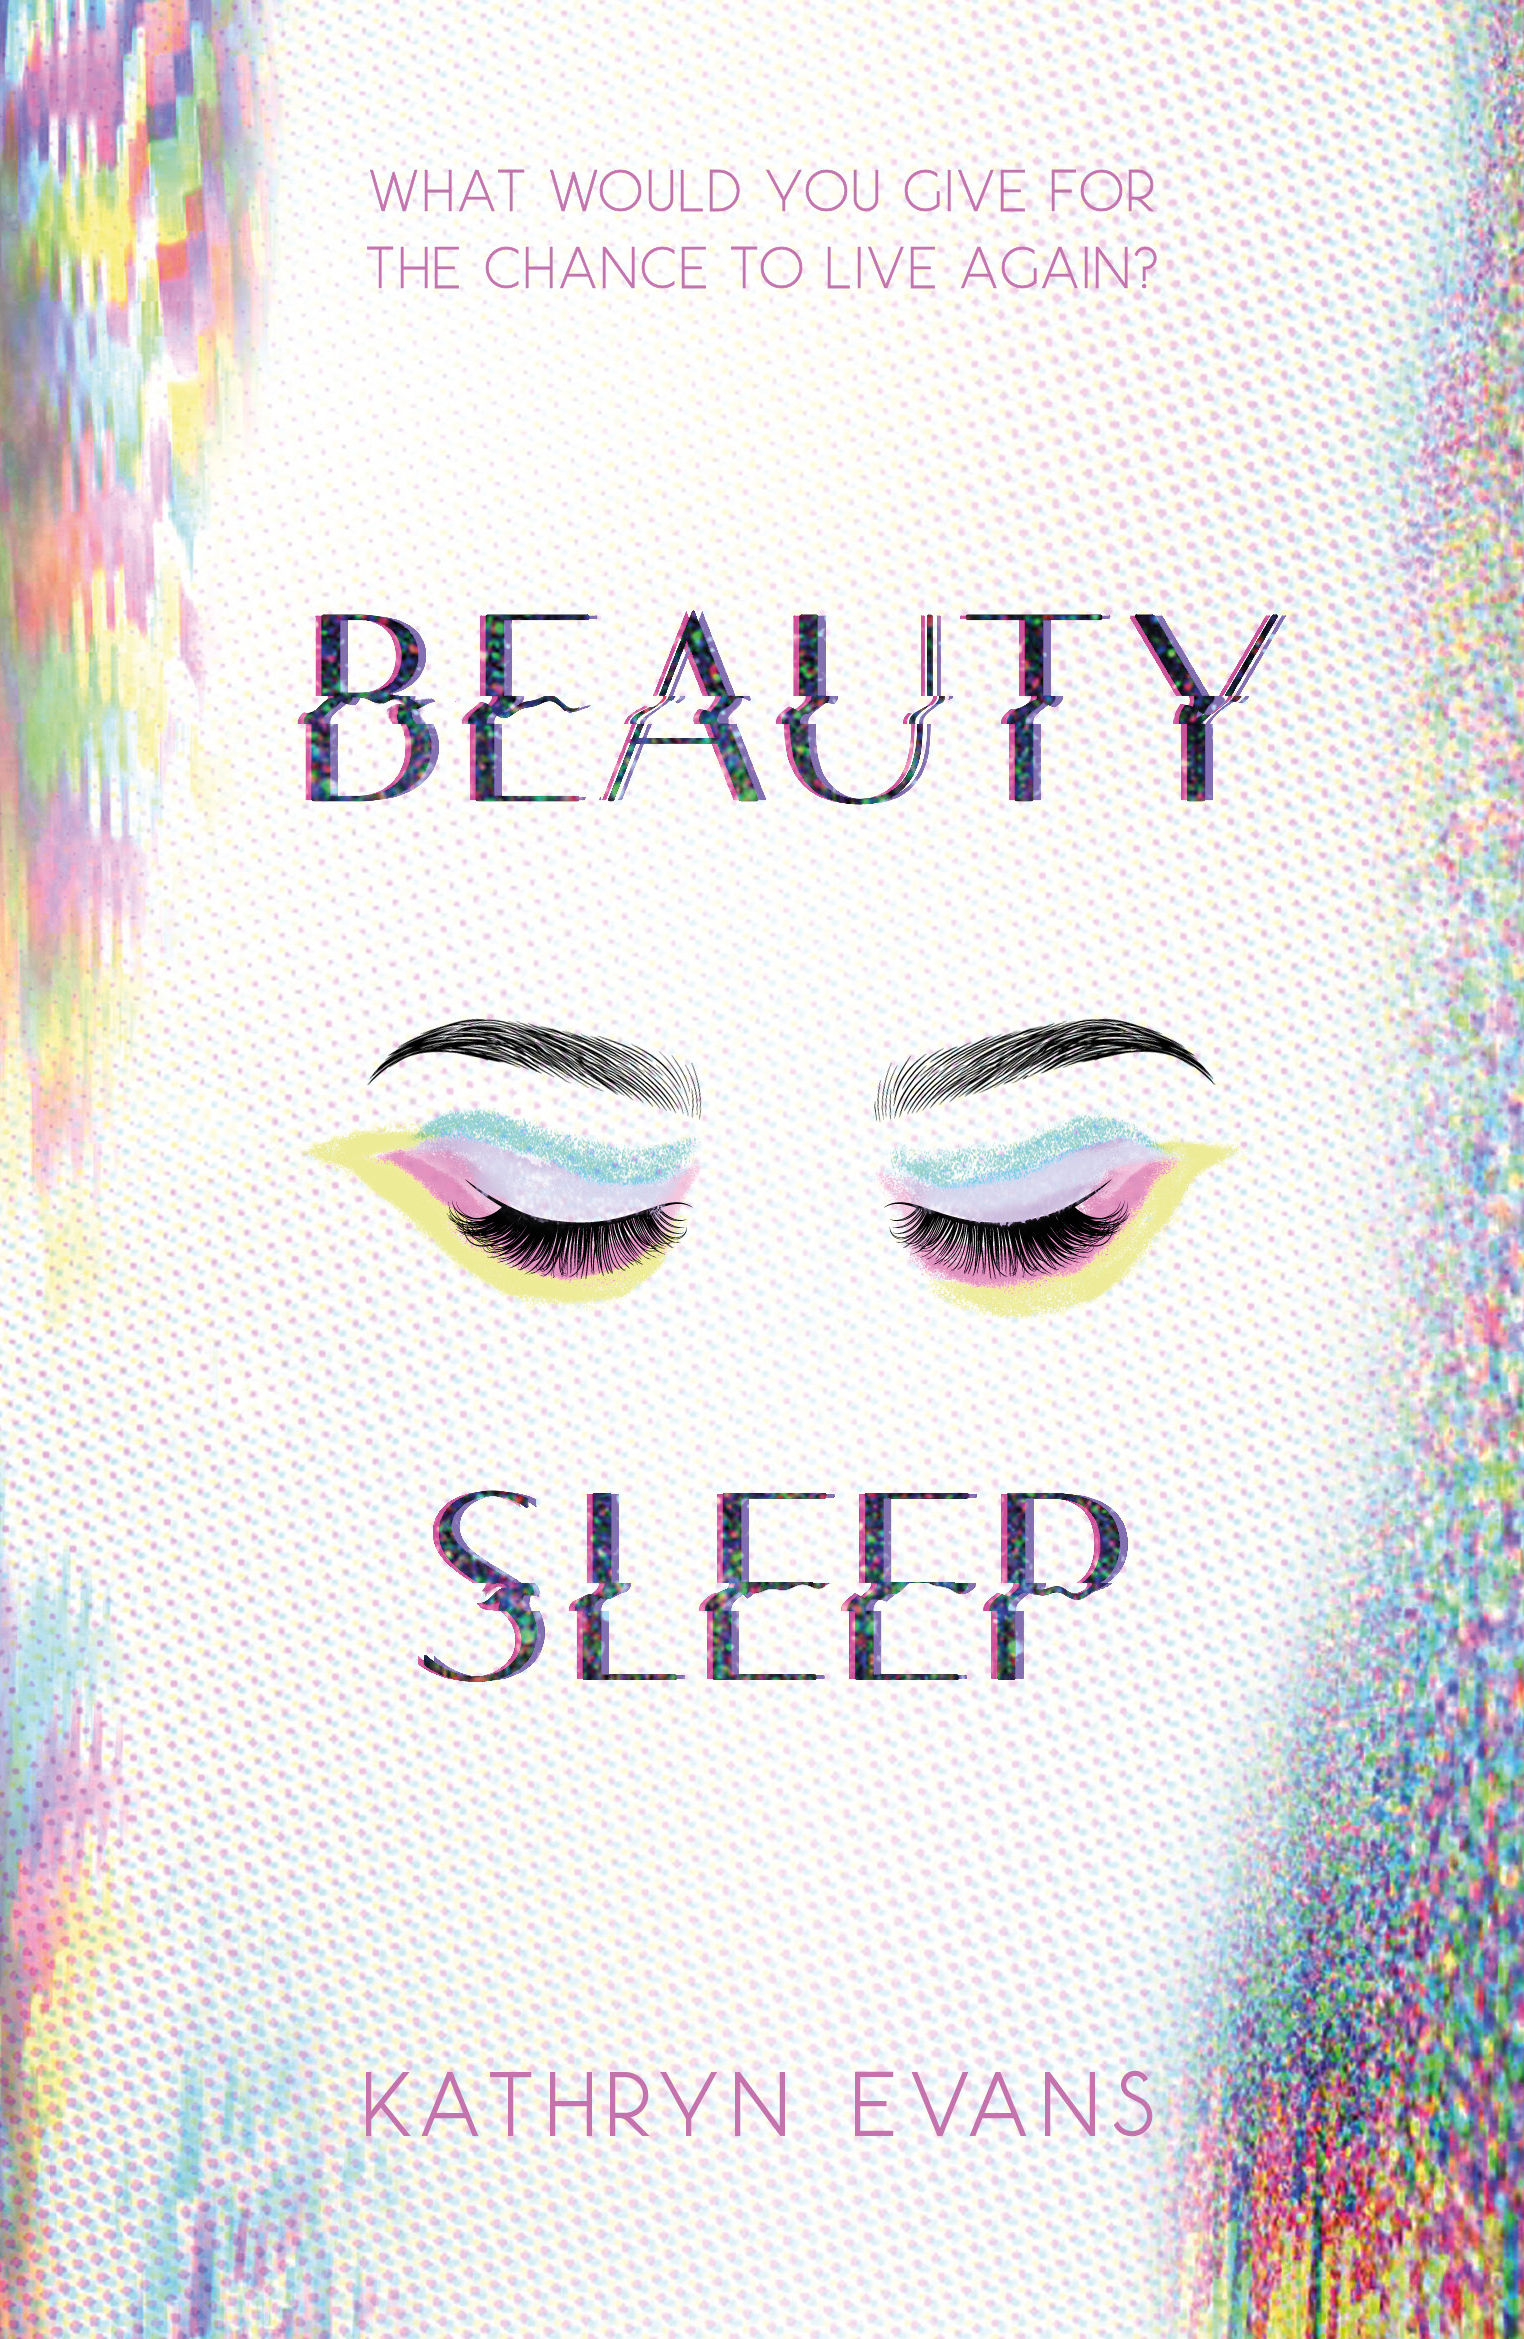 Kathryn Evans – Beauty Sleep (Teen Fiction 14+ years)